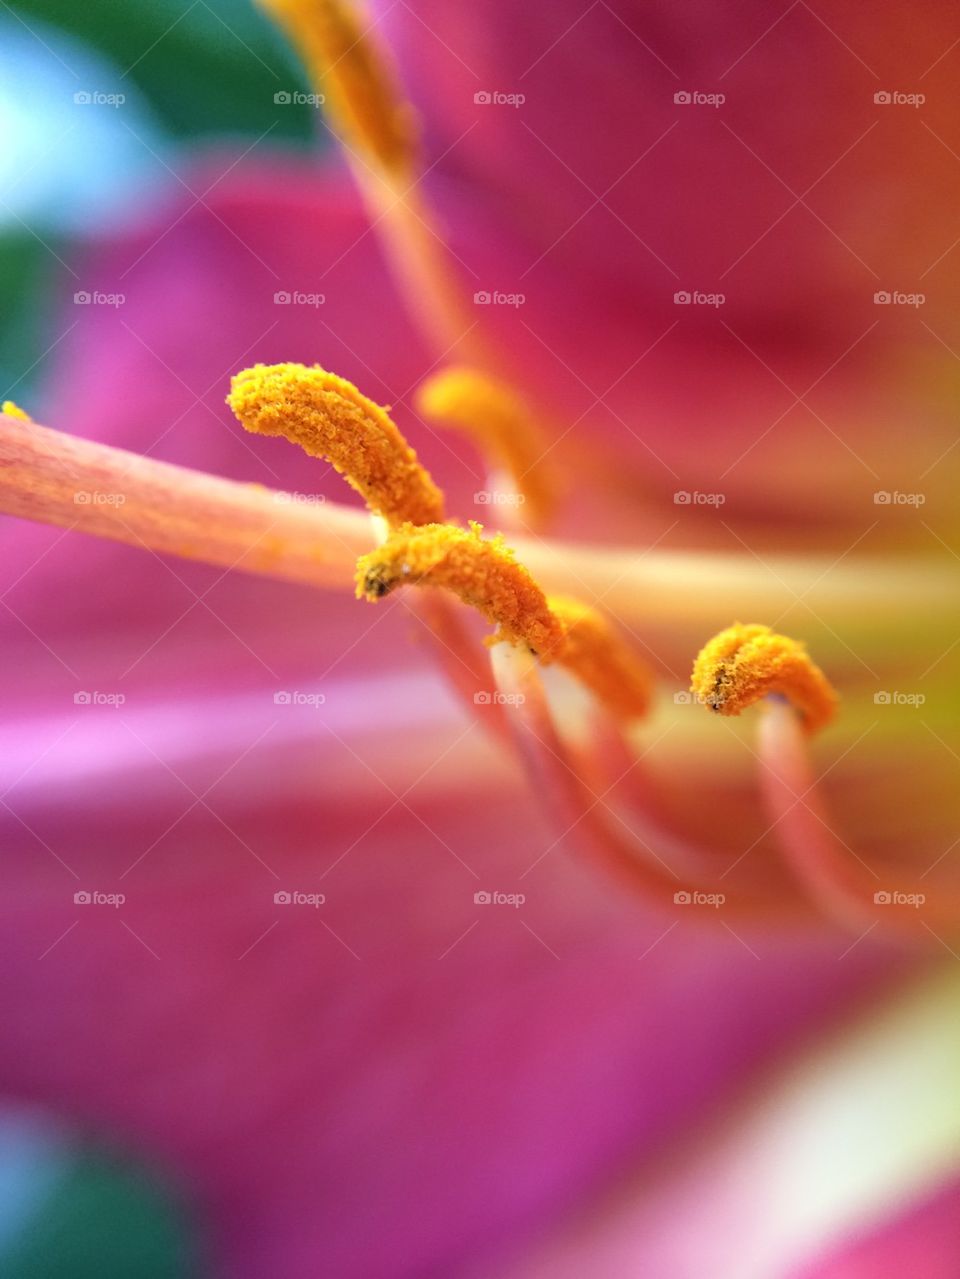 Olloclip flower 